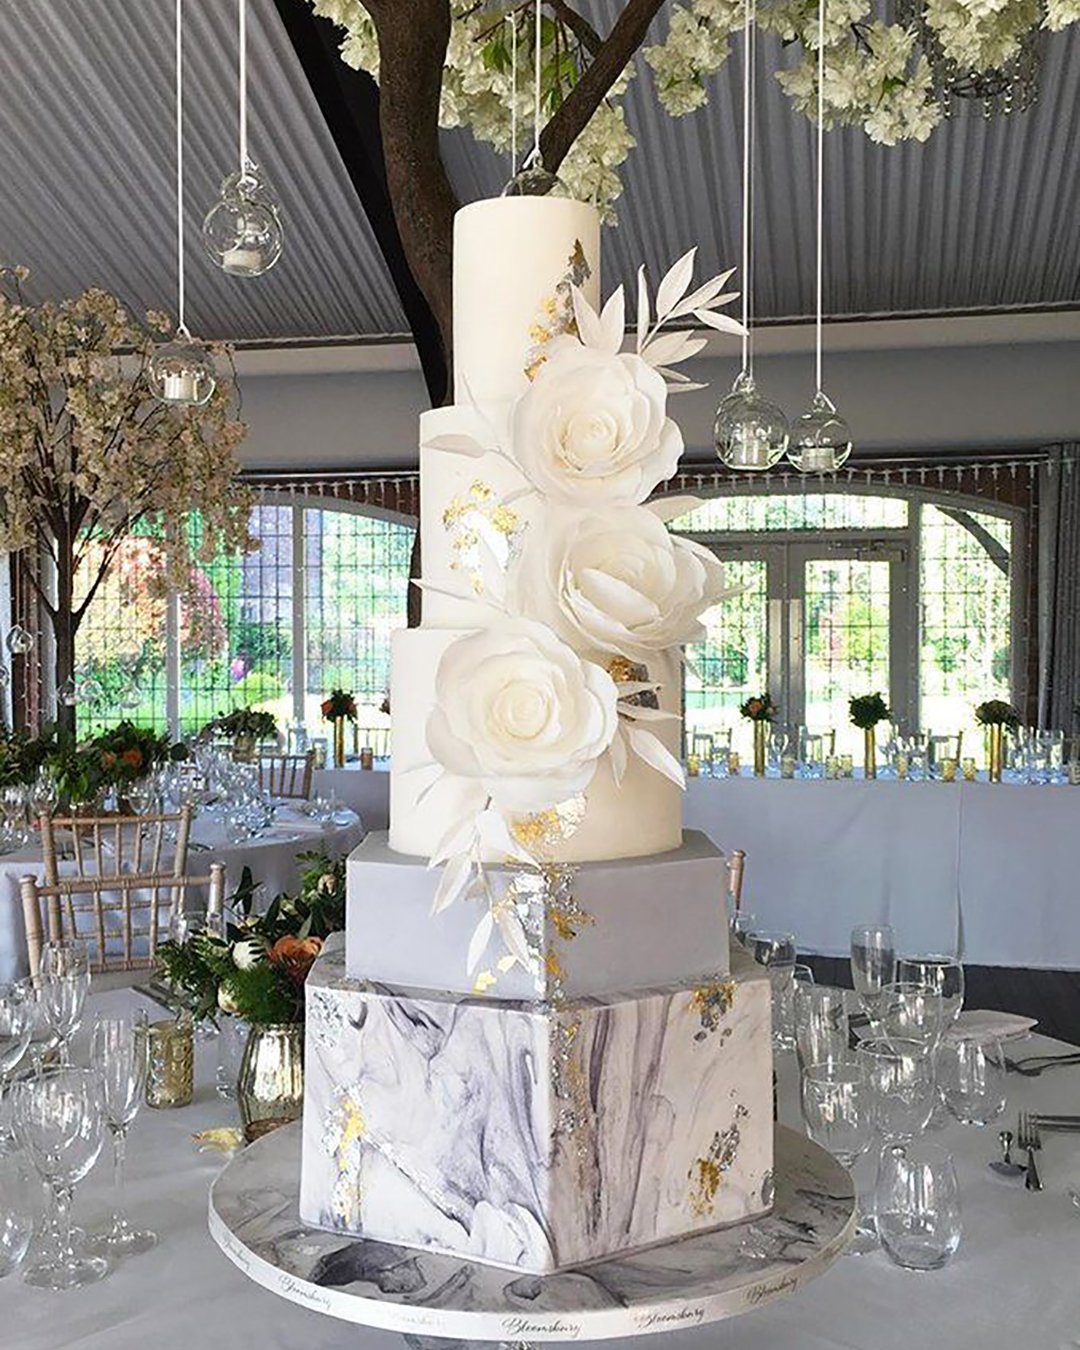 marble wedding cakes gentle whiteflowers bloomsbury cakes